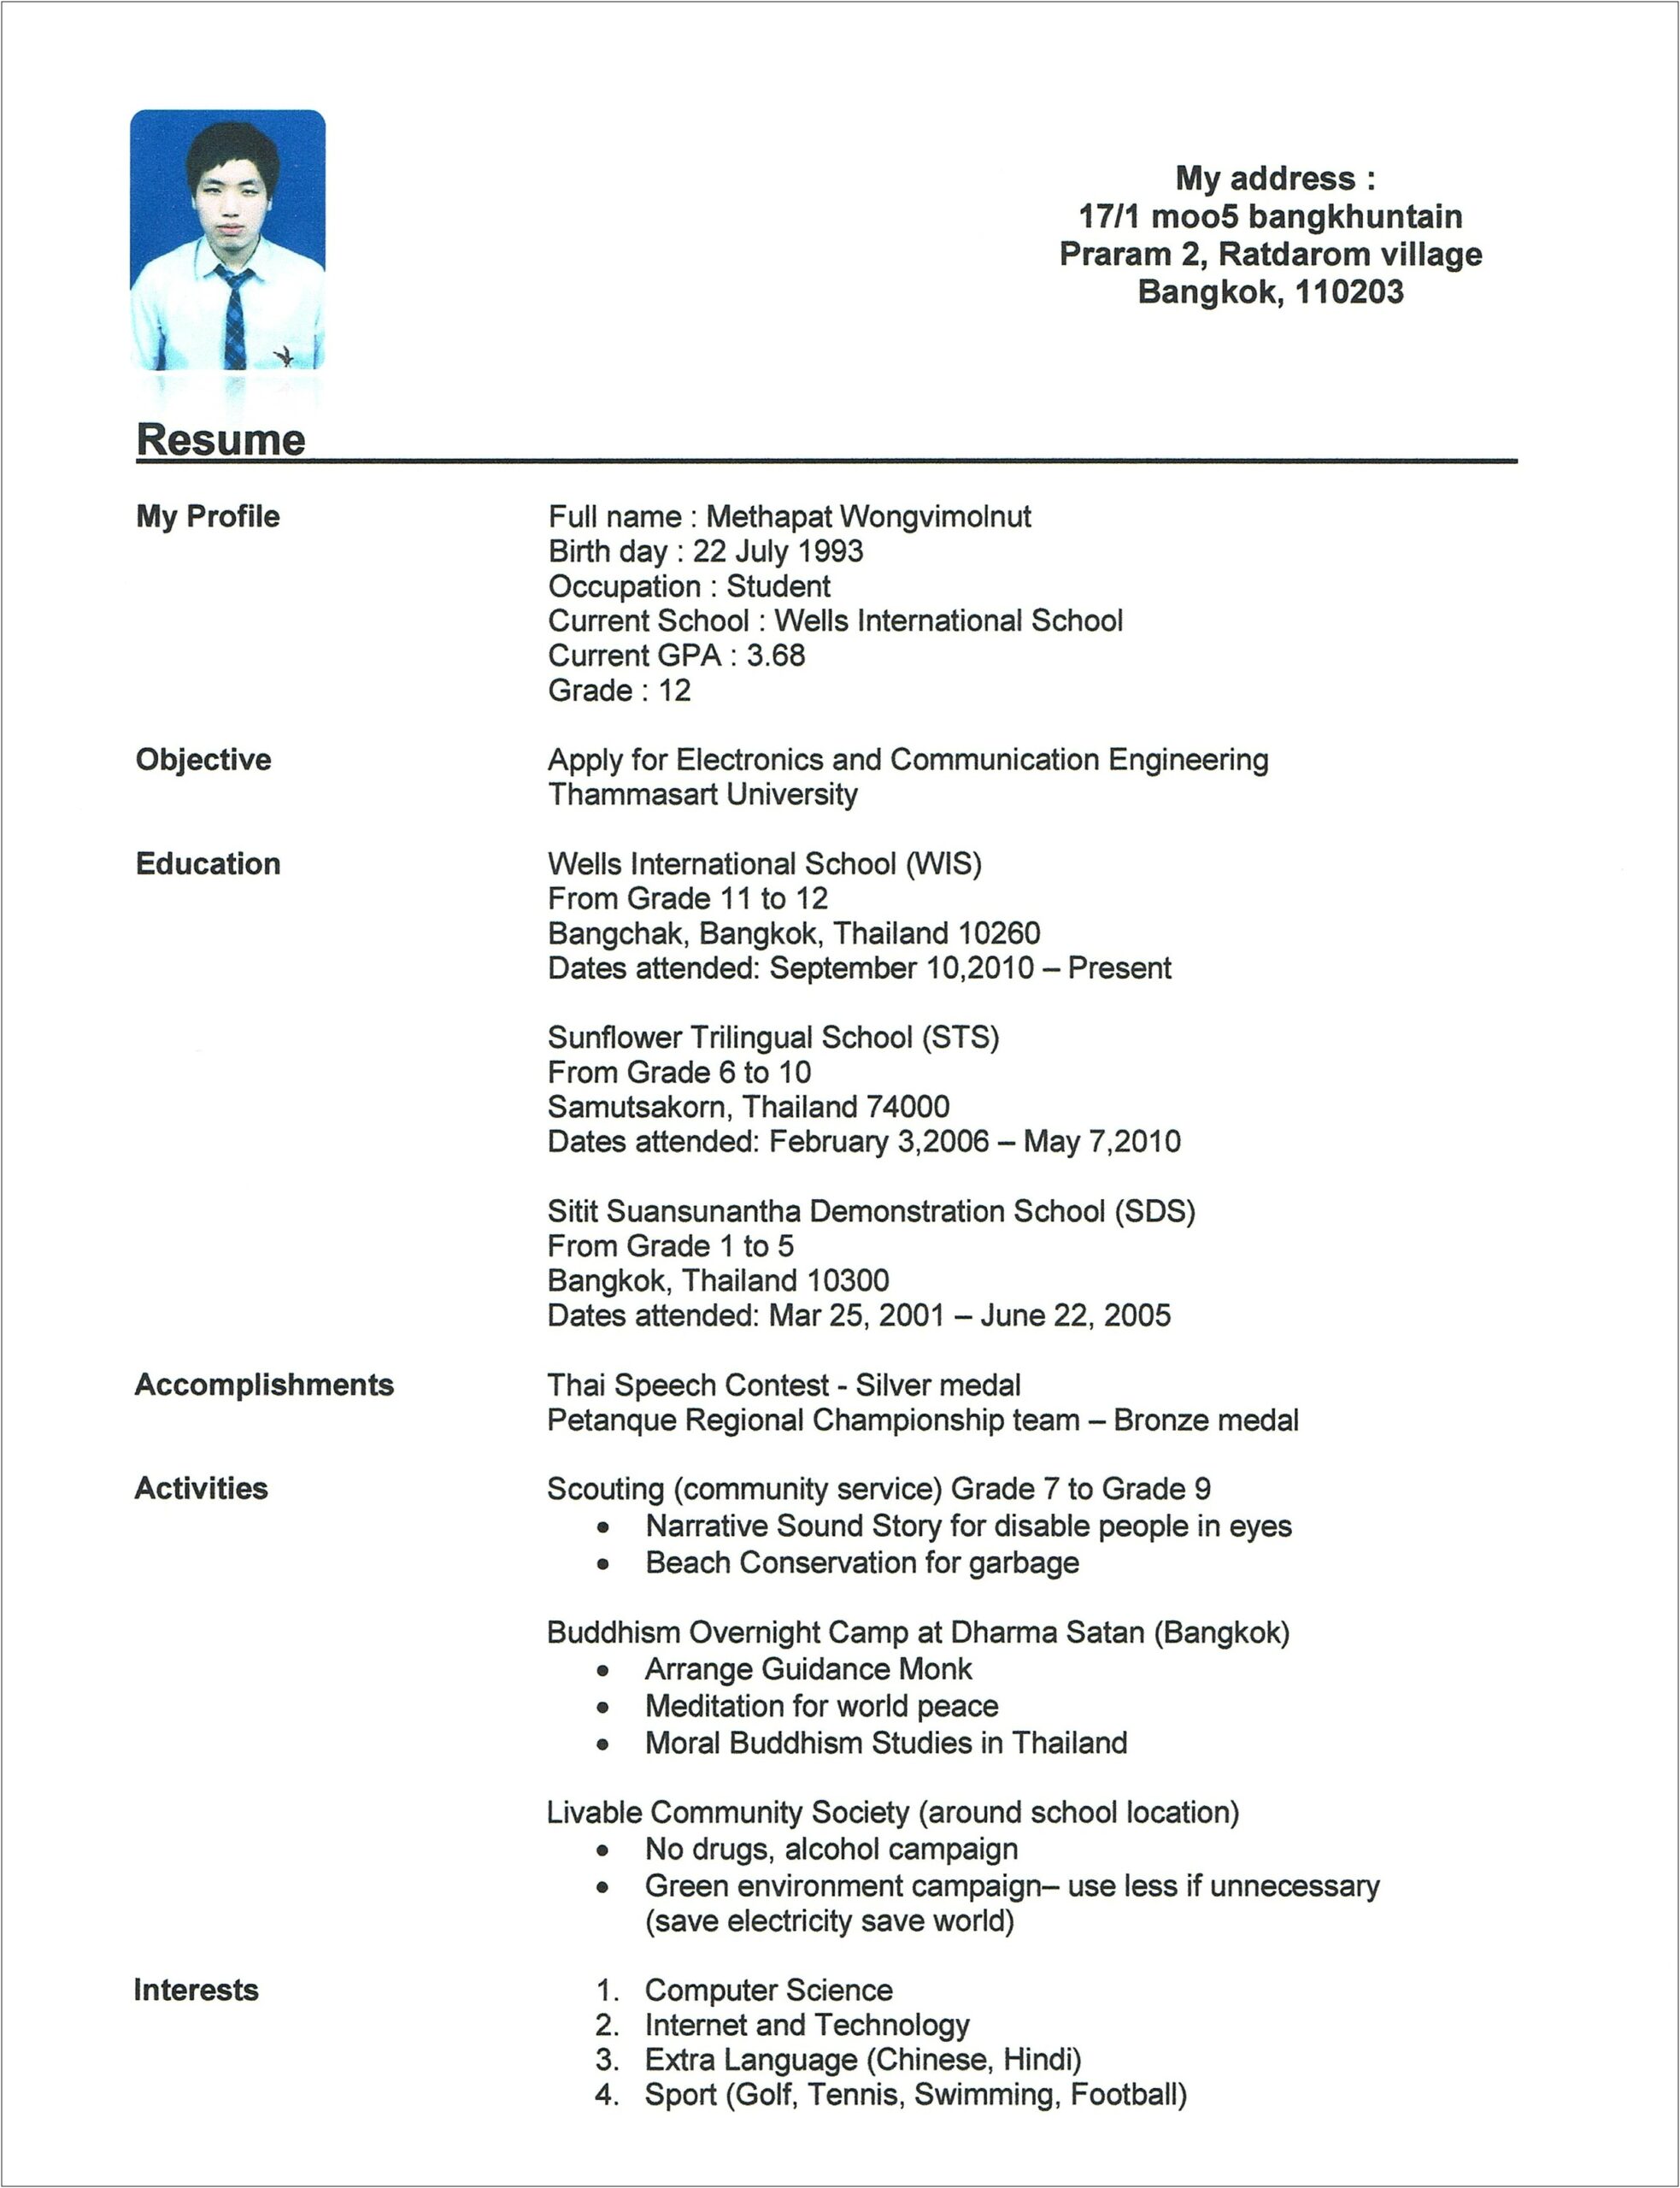 Sample Resume For Crna School